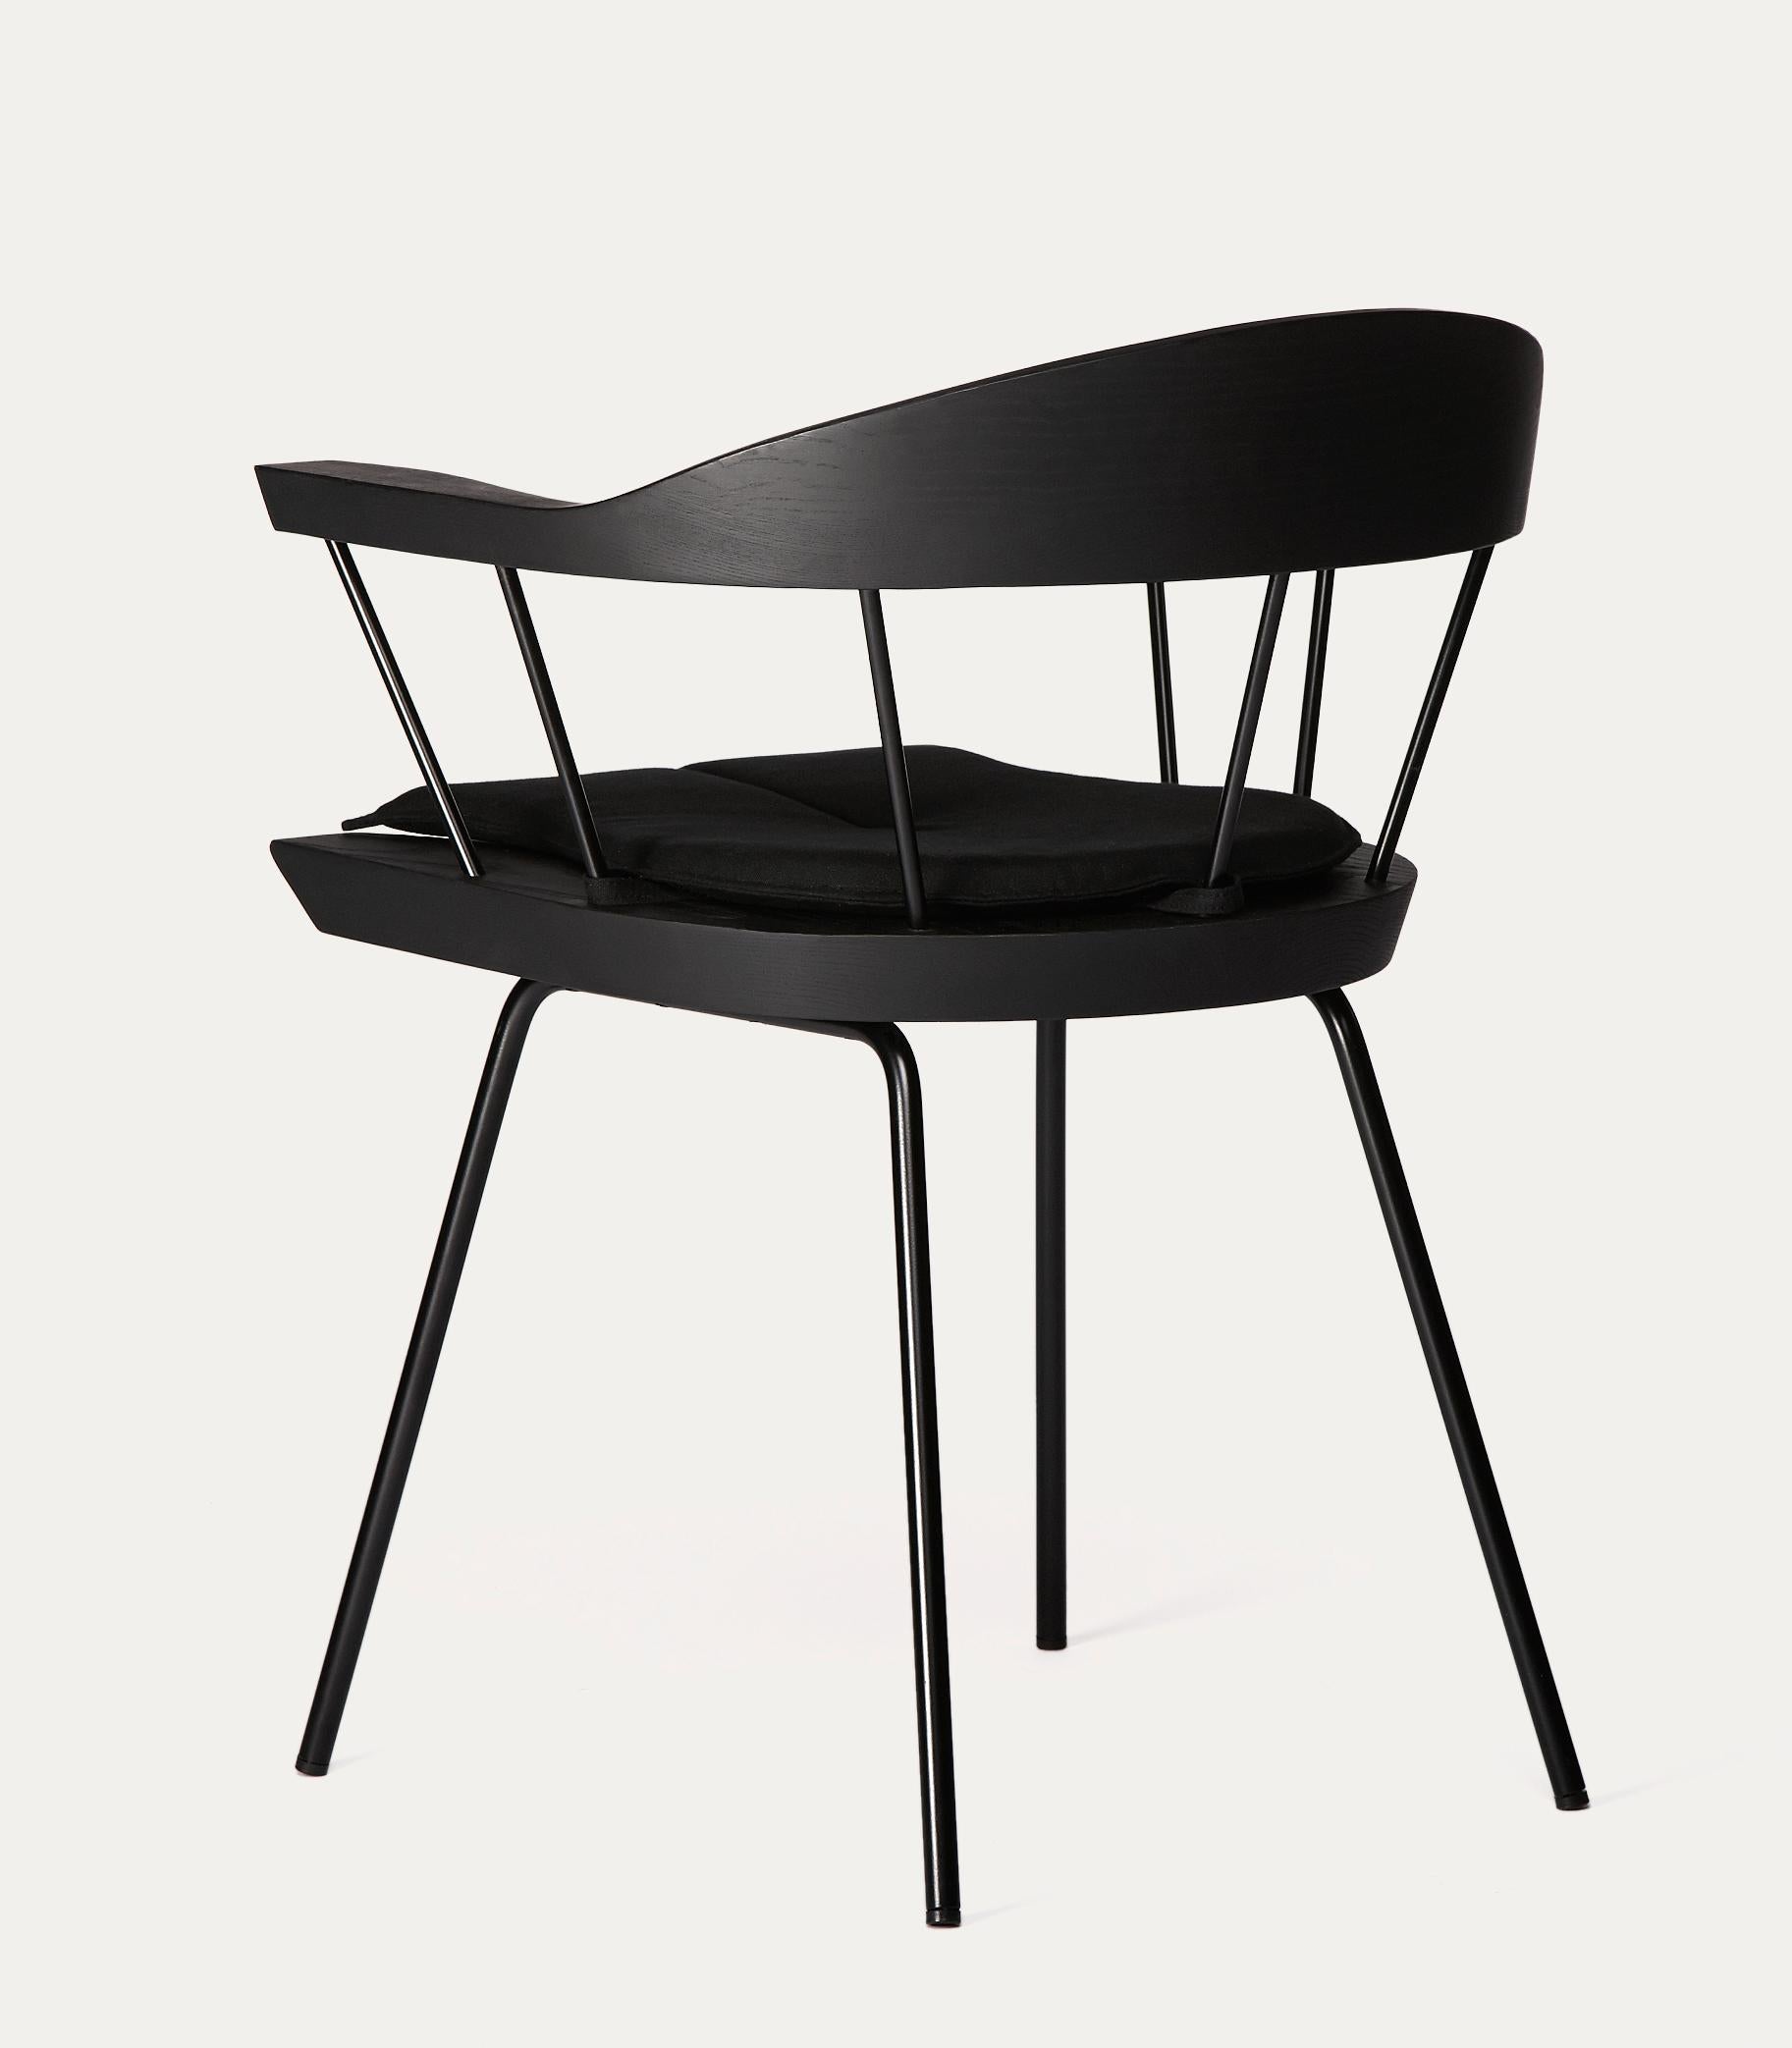 For Sale: Black (Metal Matte Black) Spindle Chair in Solid, Carved Ebonized Ash and Steel Designed by Craig Bassam 2